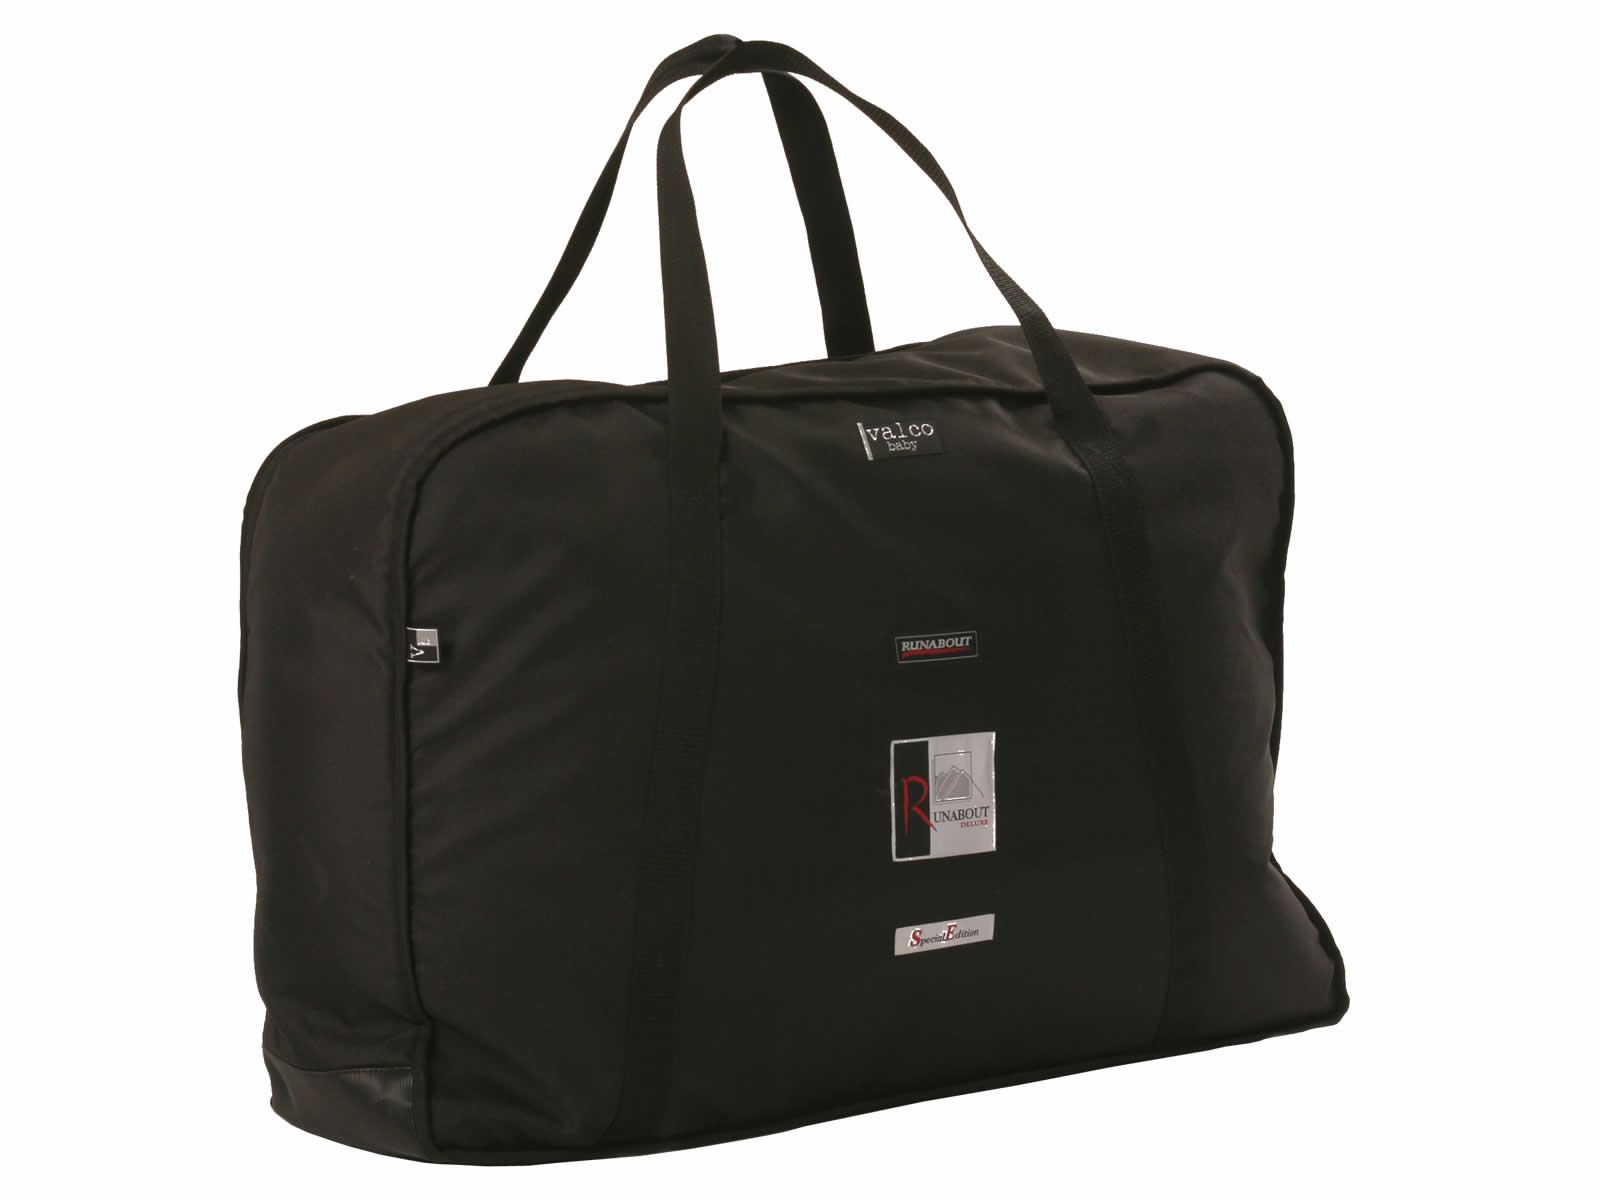 Storage Bag for Prams